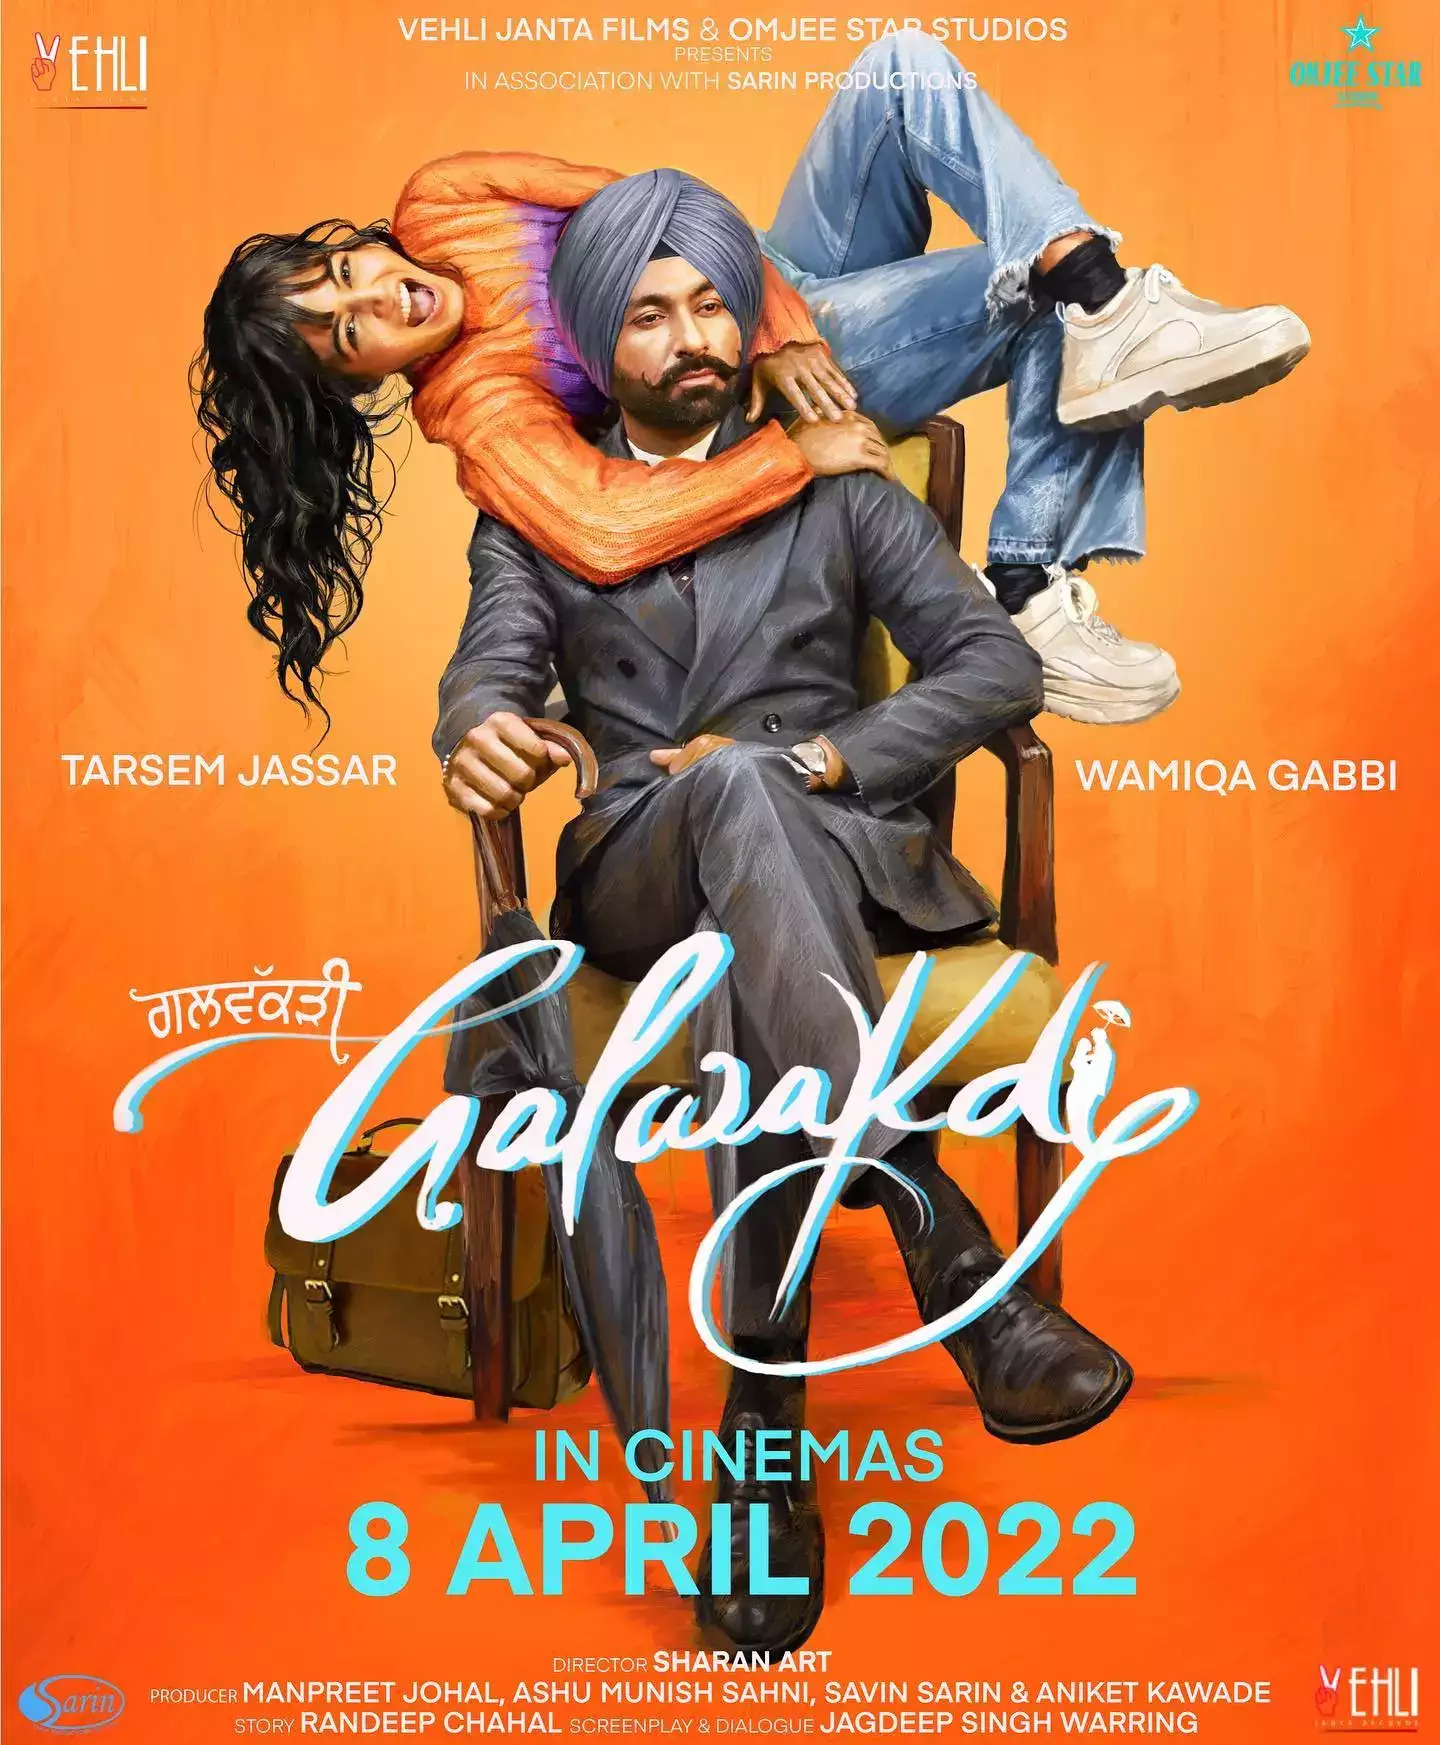 Galwakdi Movie Release Date